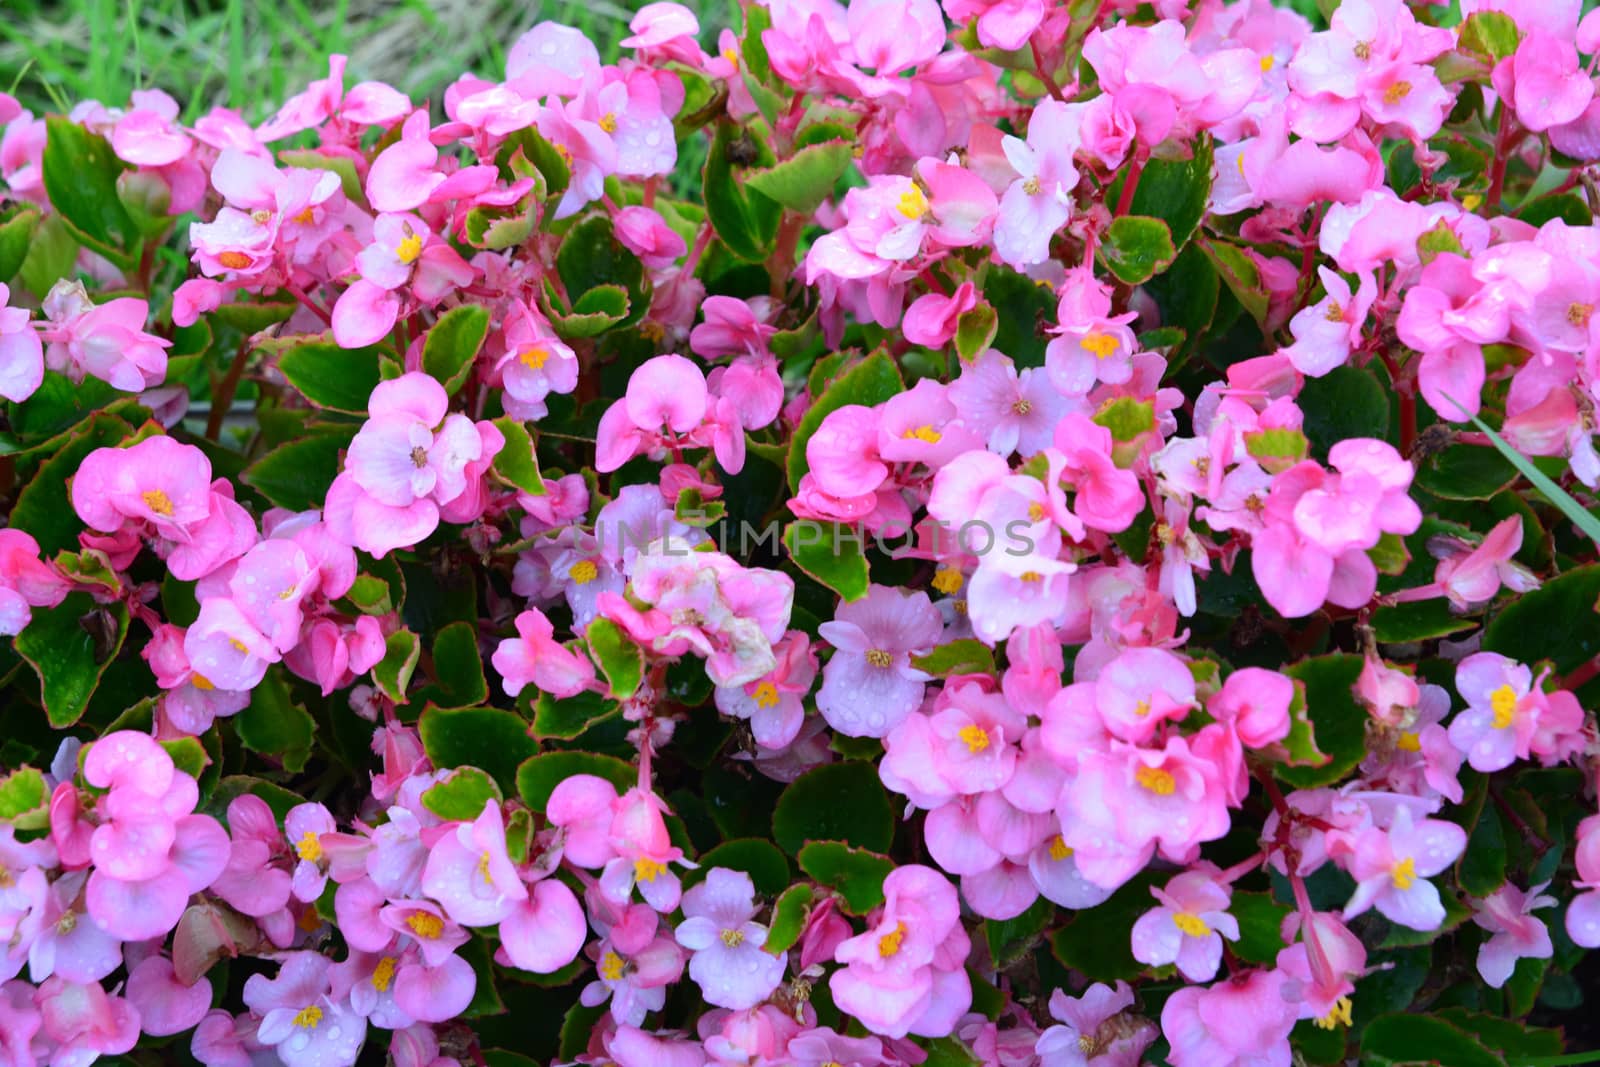 Pink tuberous begonias flowers (Begonia tuberhybrida) in garden by ideation90